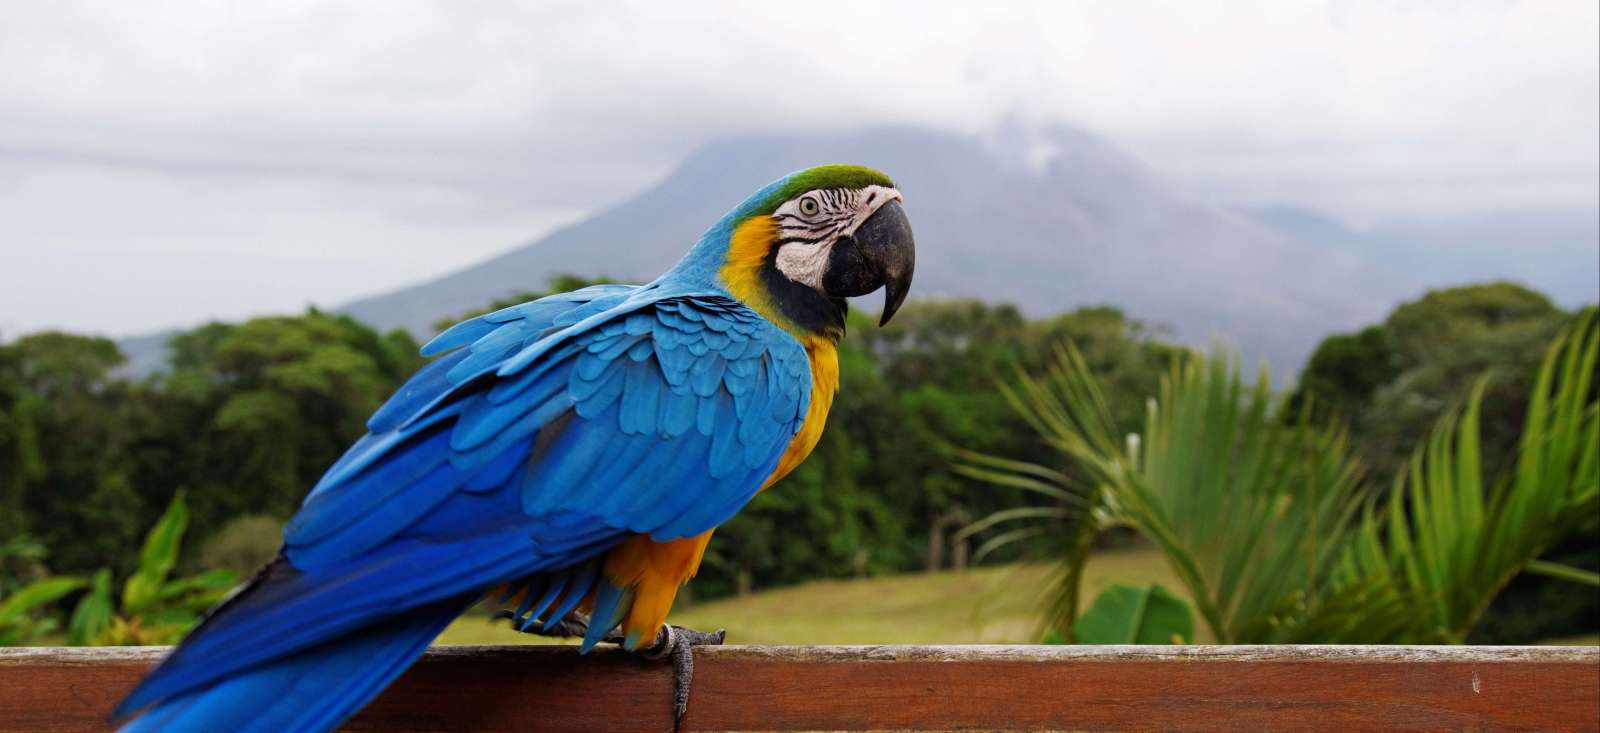 Voyage roadtrip - Costa Rica : Une semaine au pays de l\'or vert!